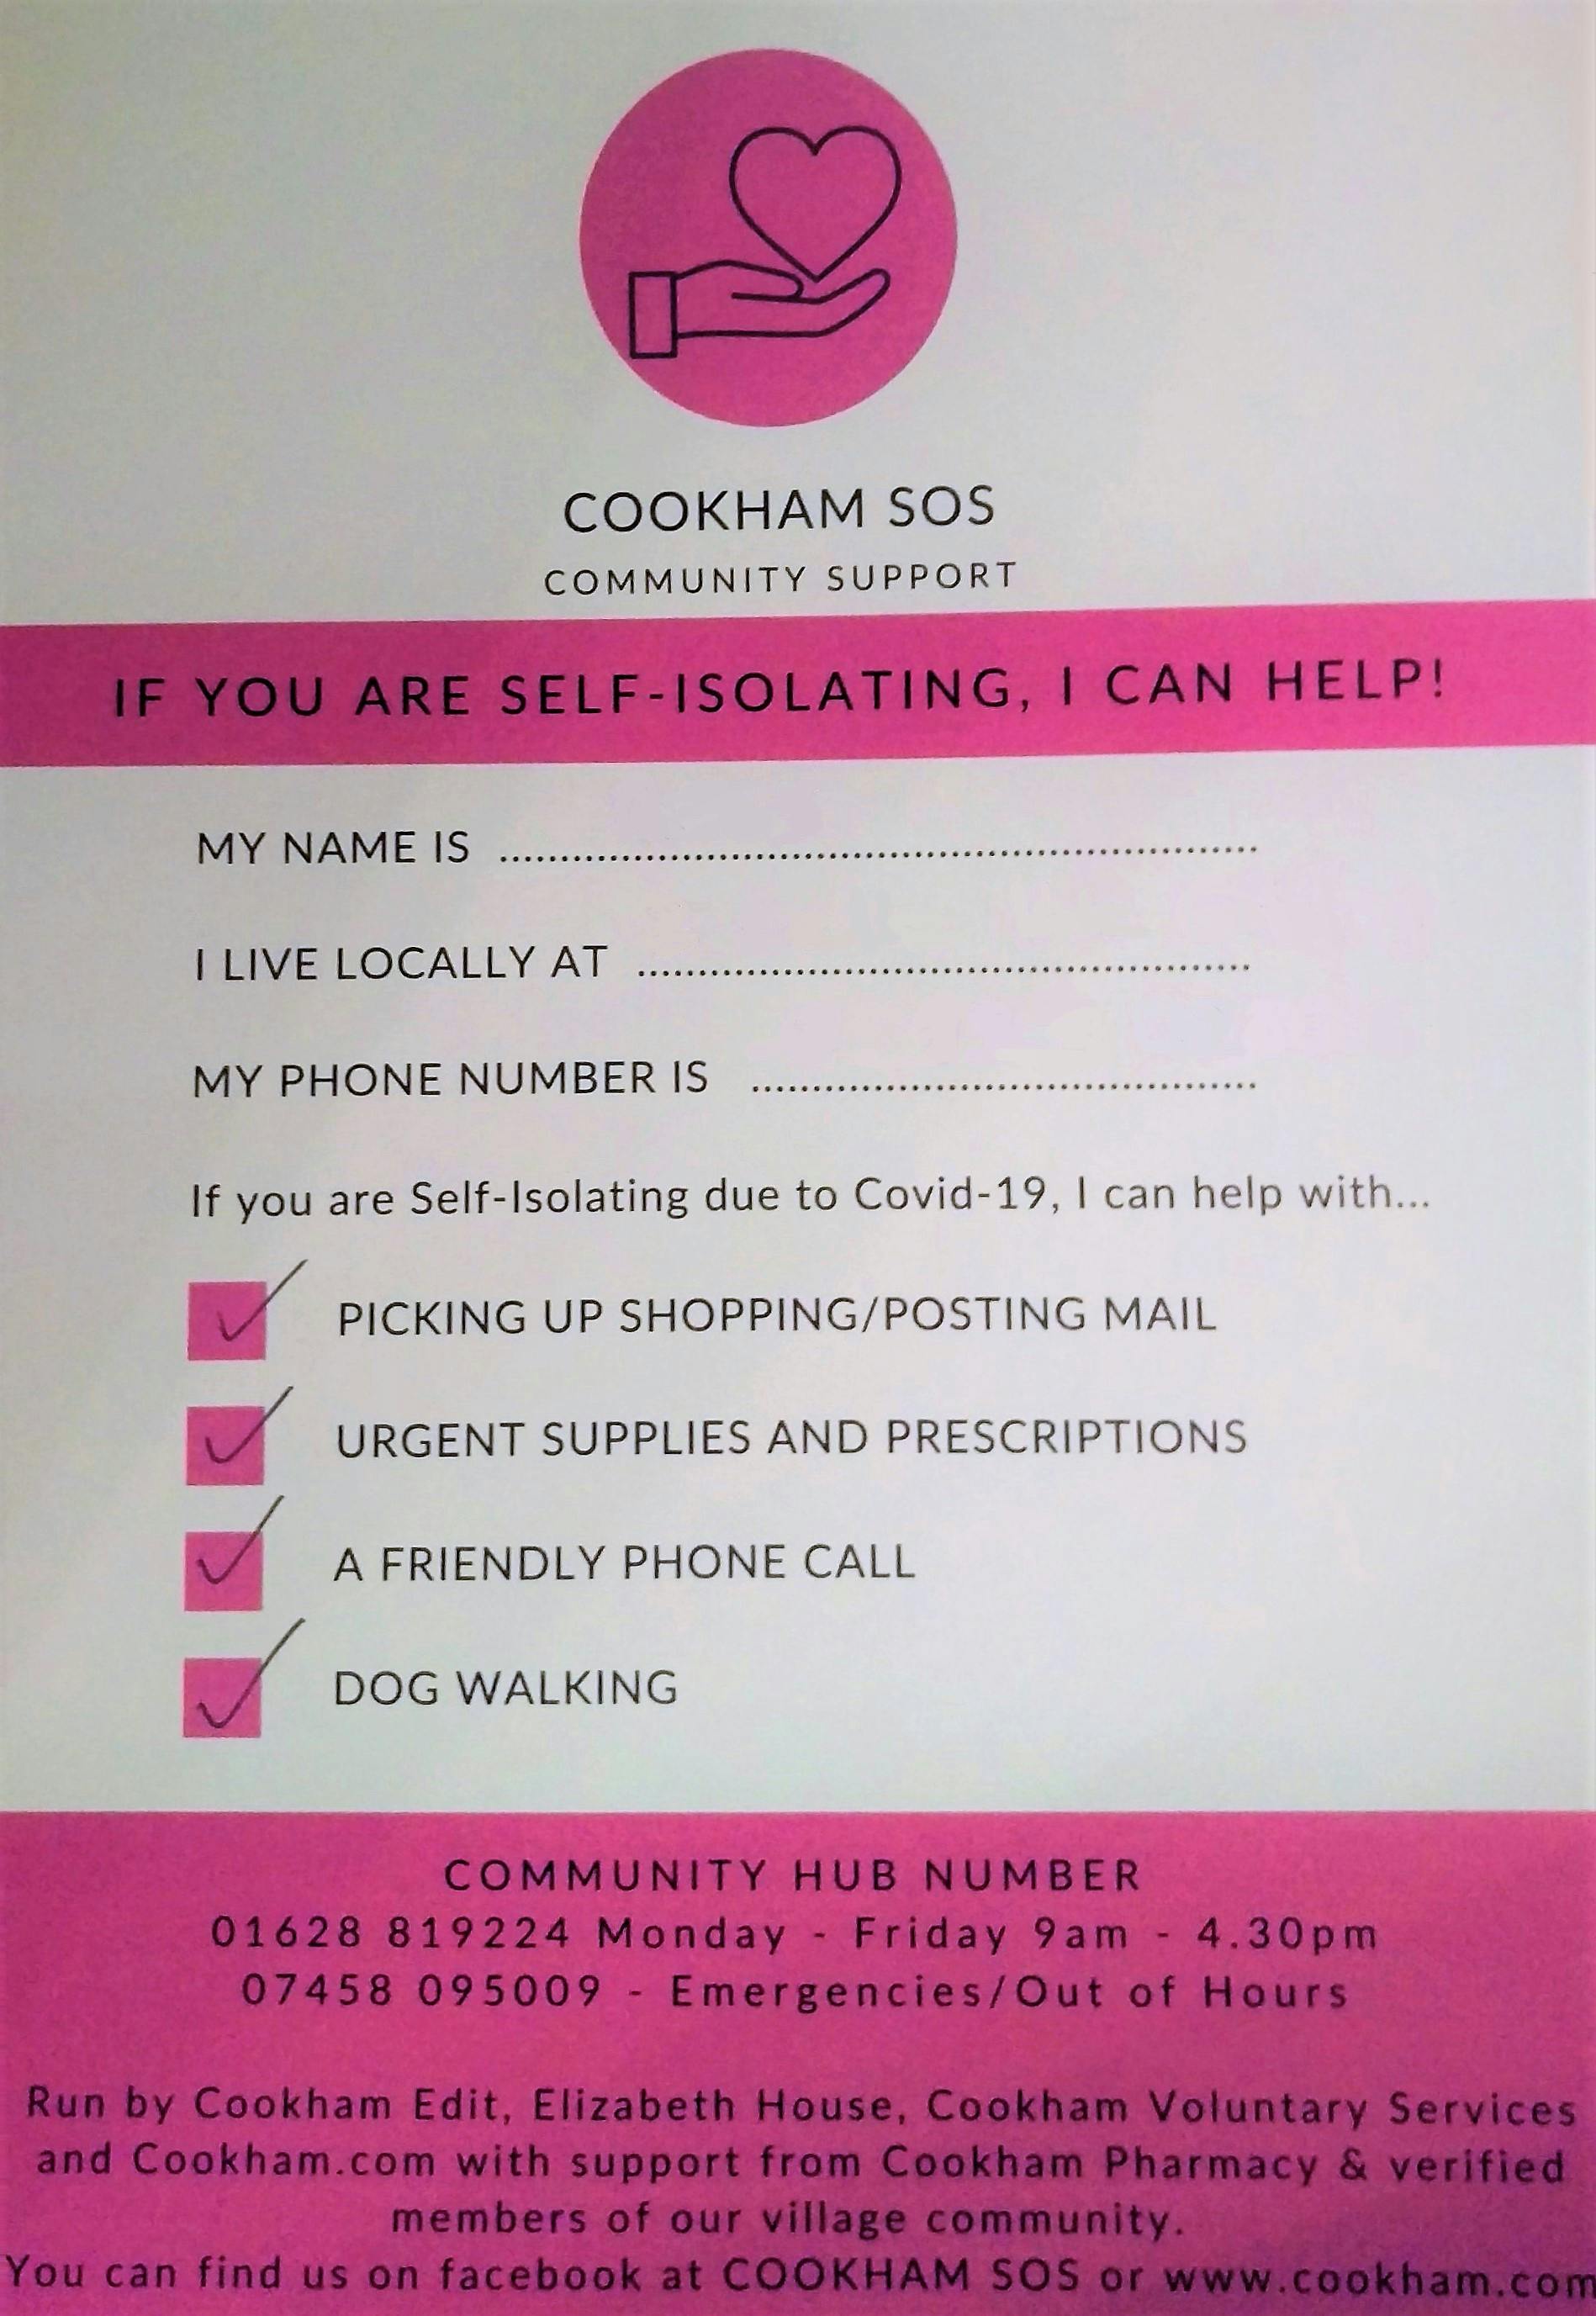 Cookham SOS Community Support Leaflet_March 2020.jpg